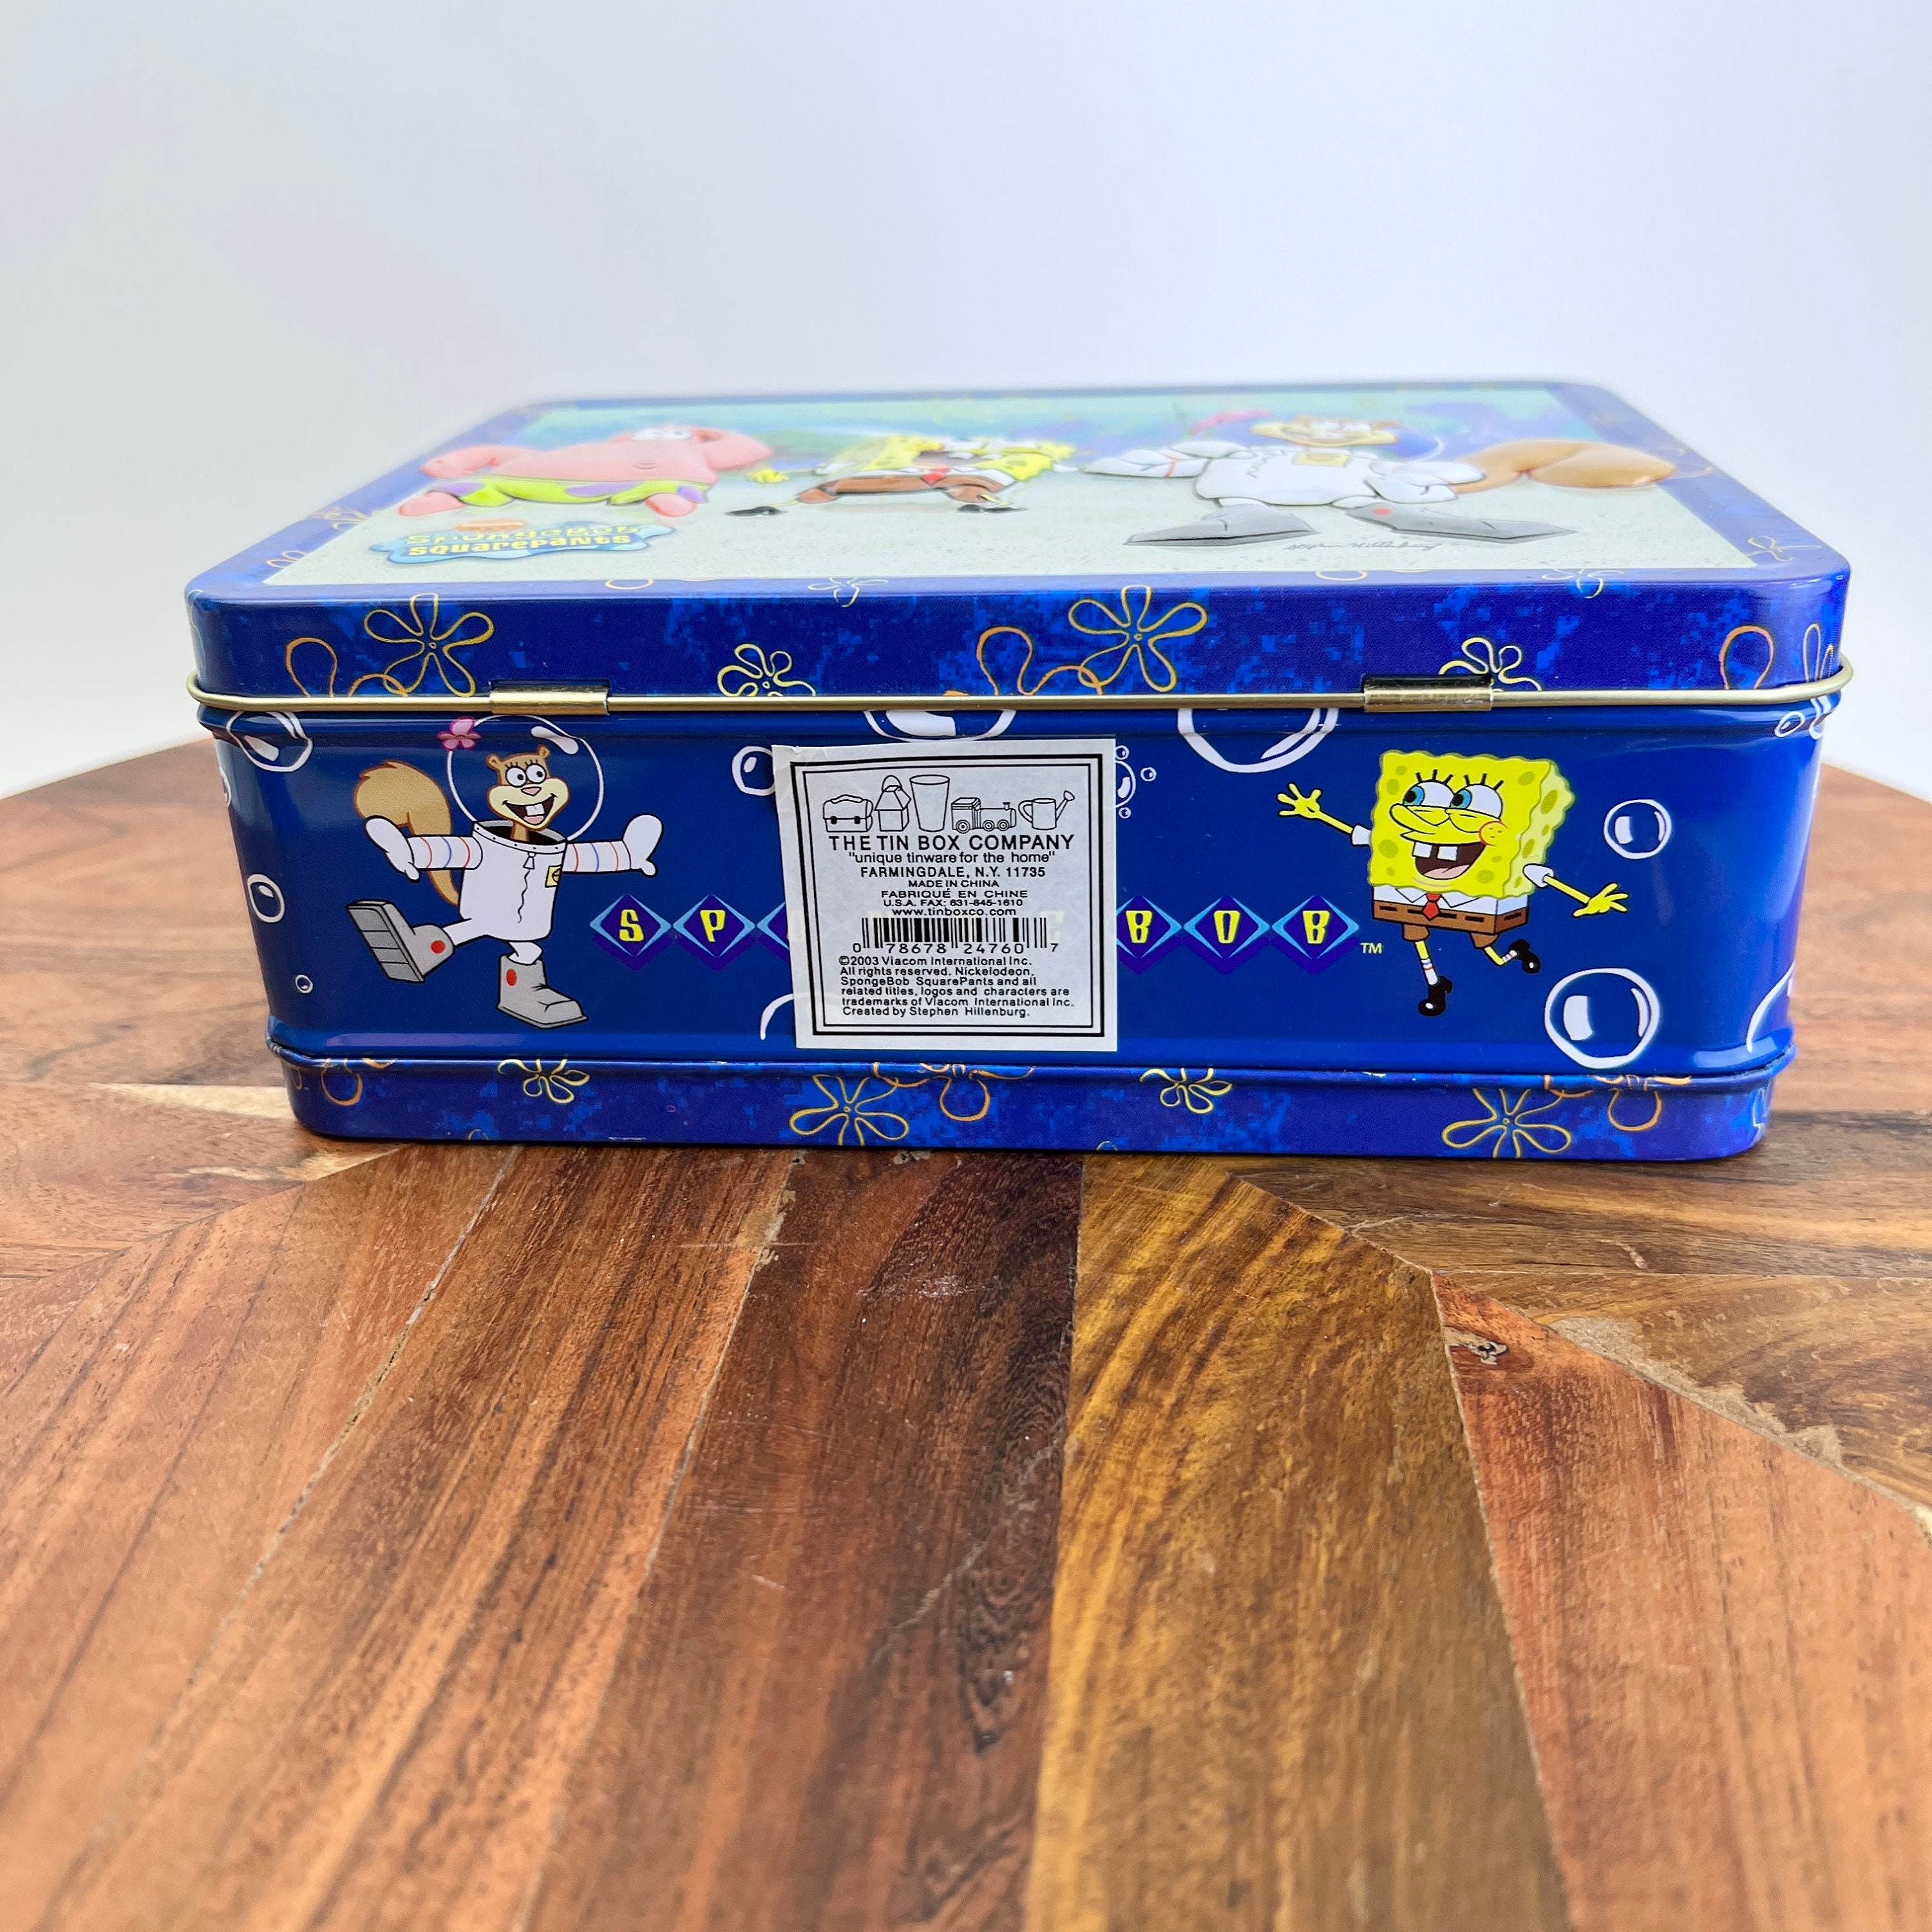 Spongebob Lunch Box Tin Sandy Cheeks Patrick Star Nickelodeon